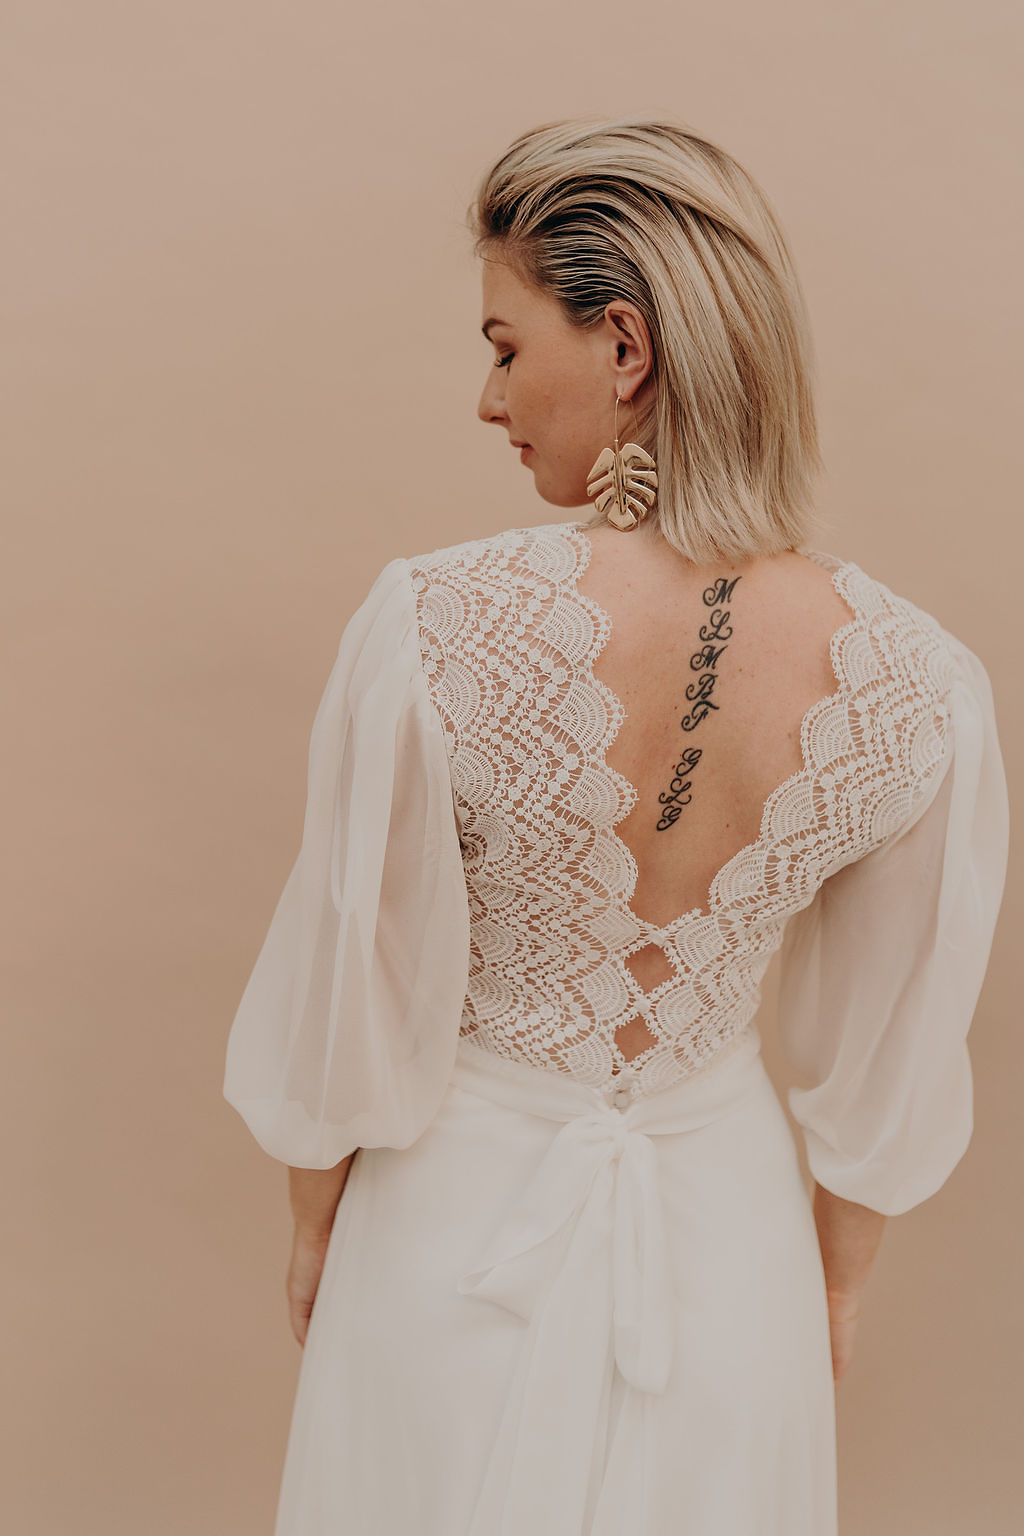 Caroline Quesnel Collection 2020 - Robes de mariée - Blog Mariage Madame C